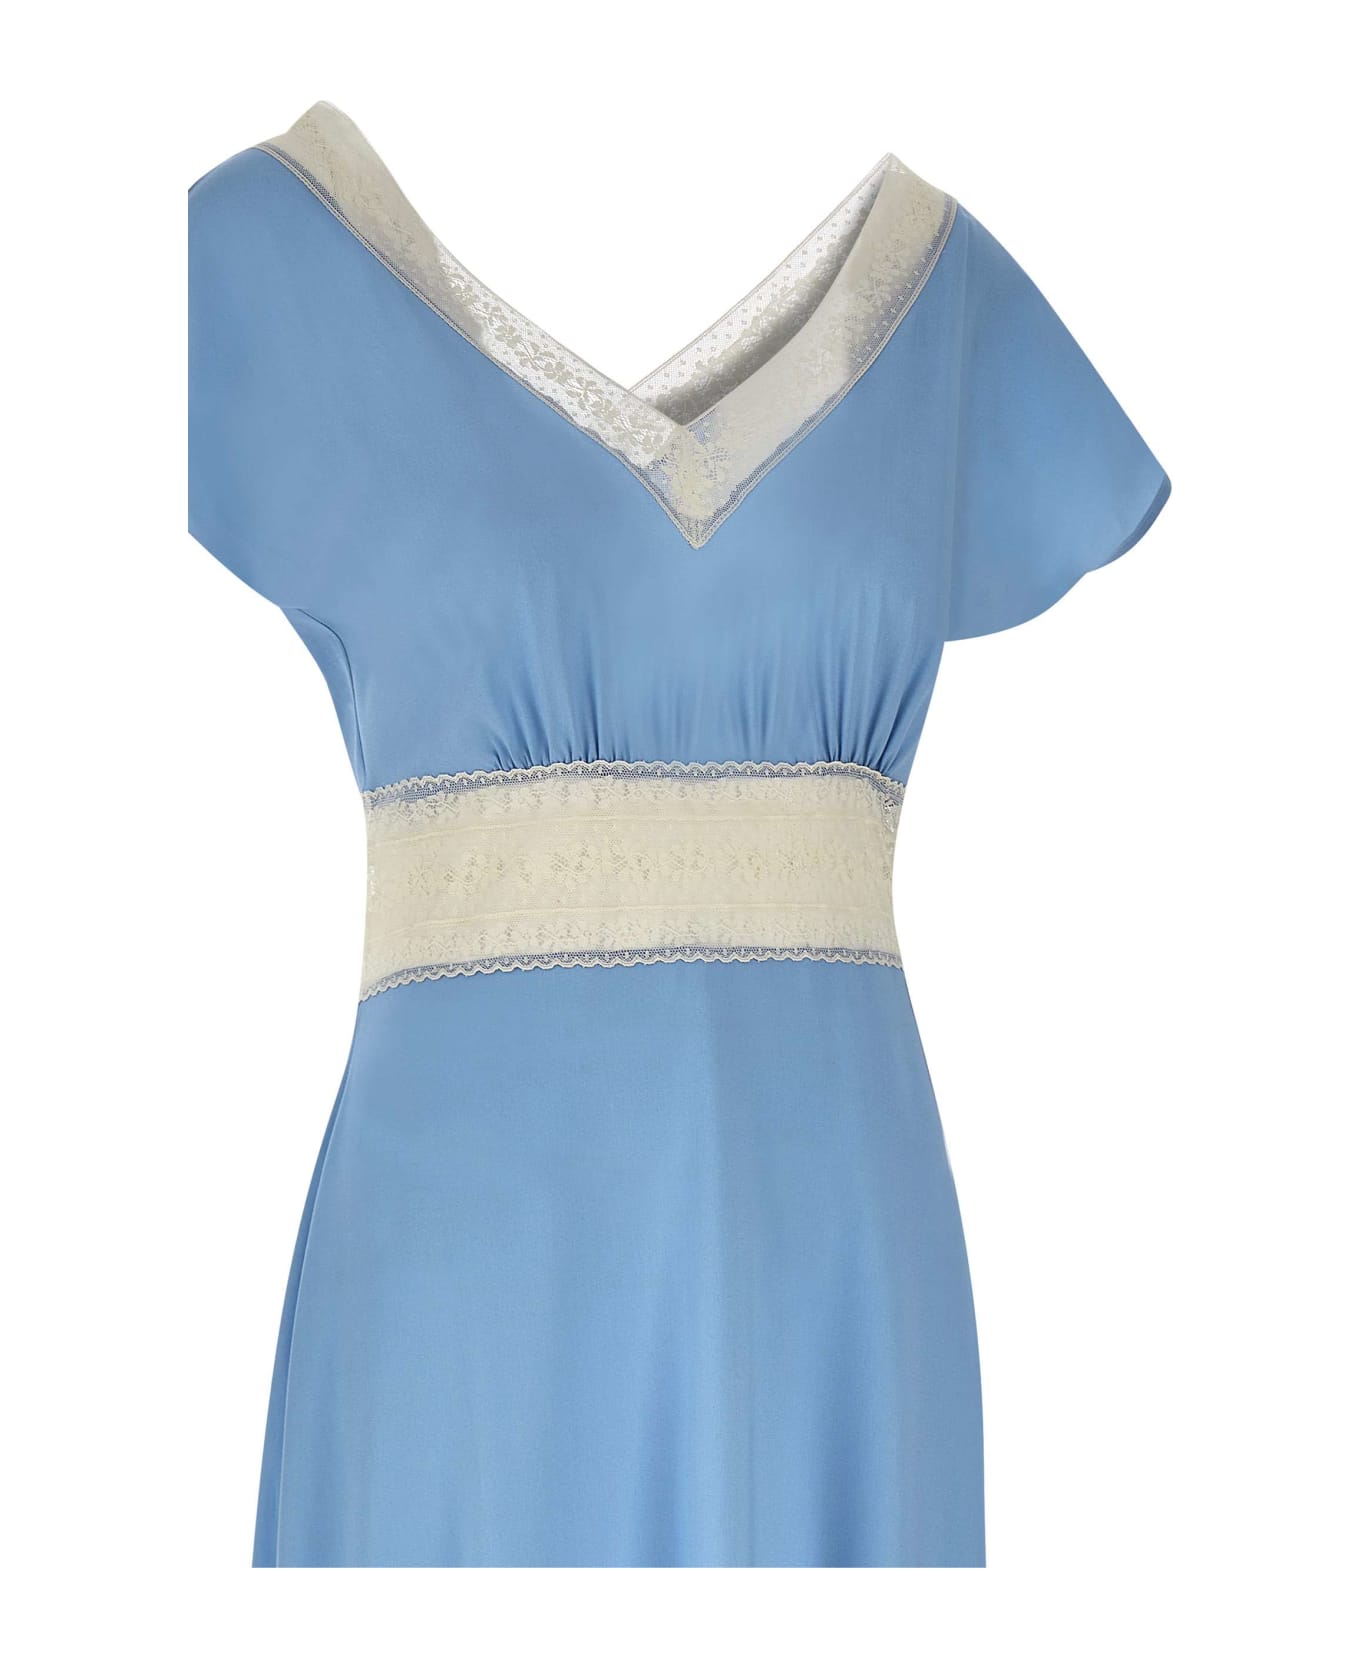 Parosh "sesamo" Silk Dress - LIGHT BLUE